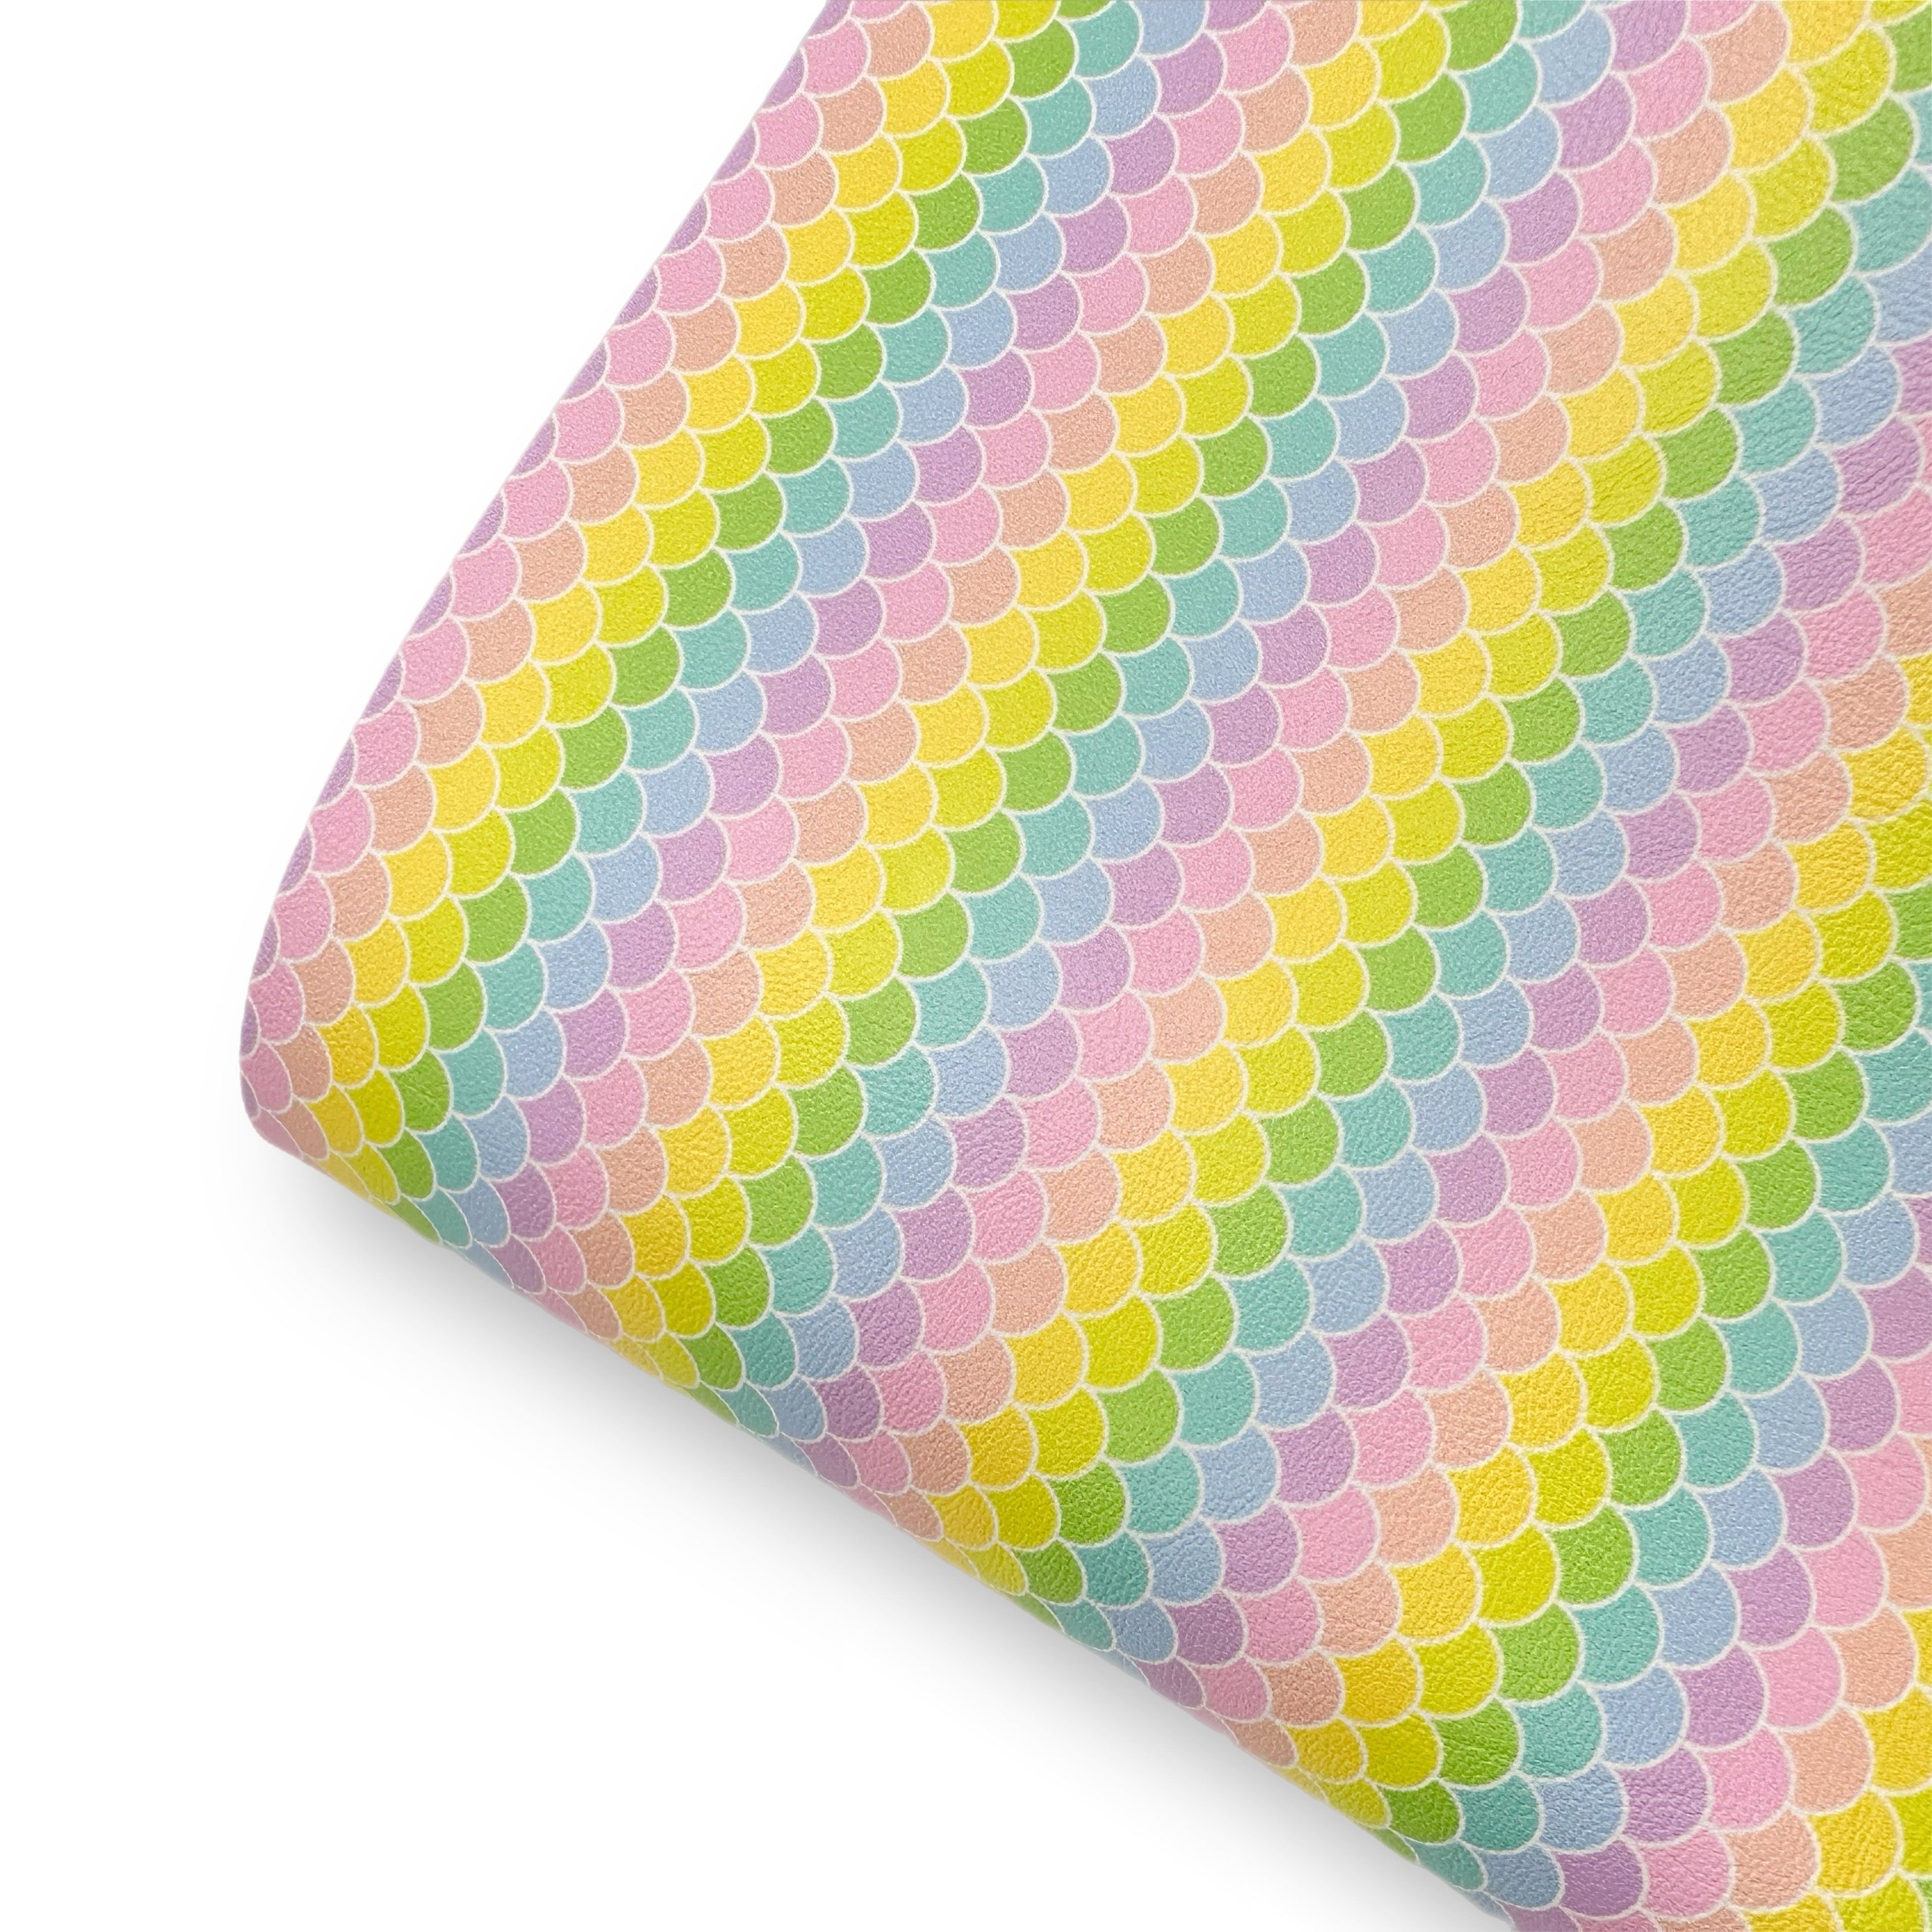 Pastel Rainbow Mermaid Tail Premium Faux Leather Fabric